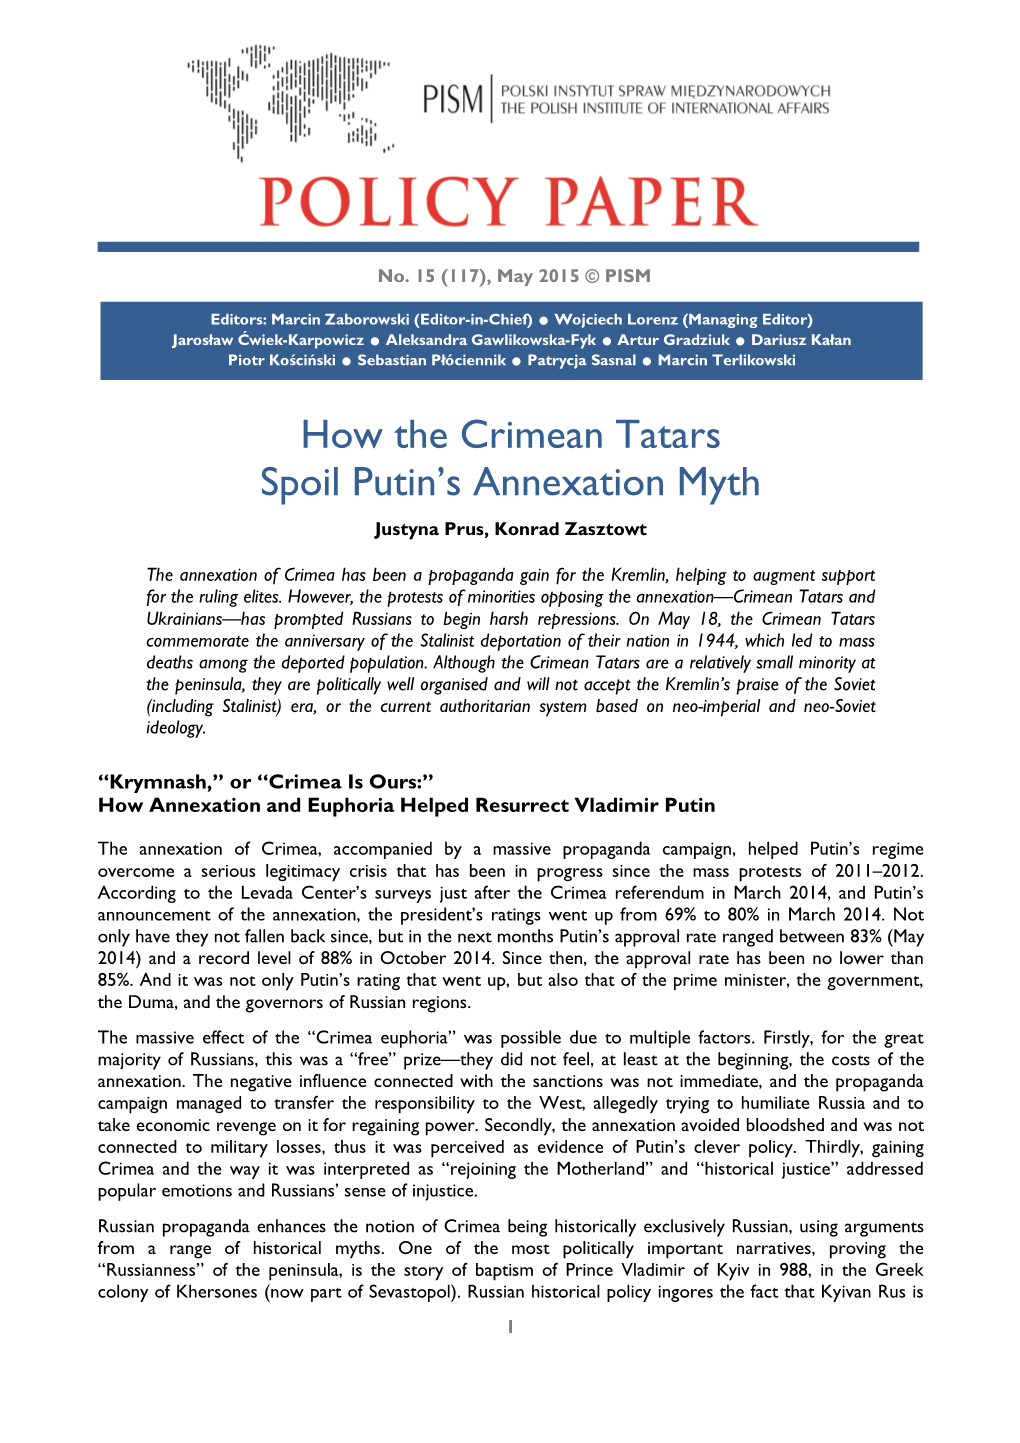 How the Crimean Tatars Spoil Putin's Annexation Myth